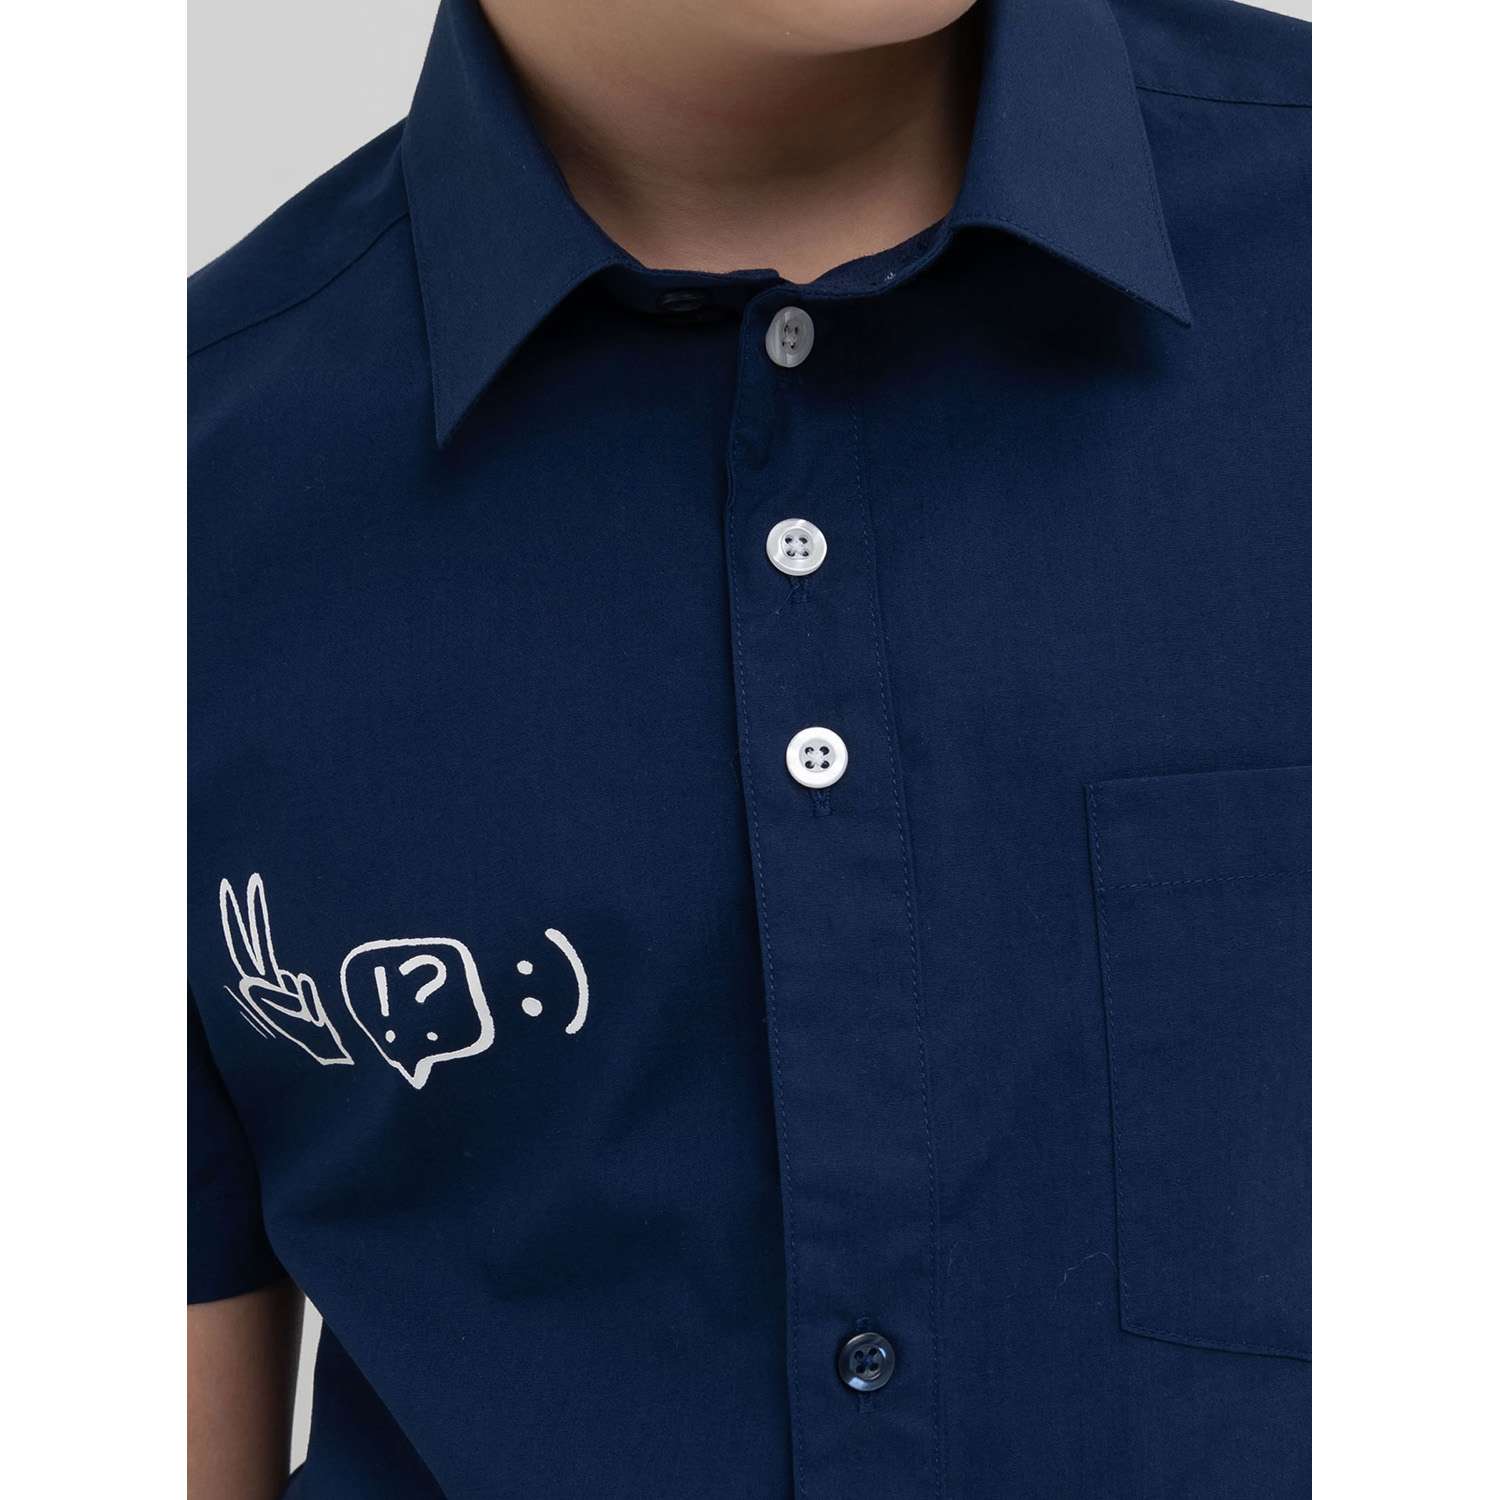 Рубашка PELICAN BWCT7107/Темно-синий(54) - фото 2